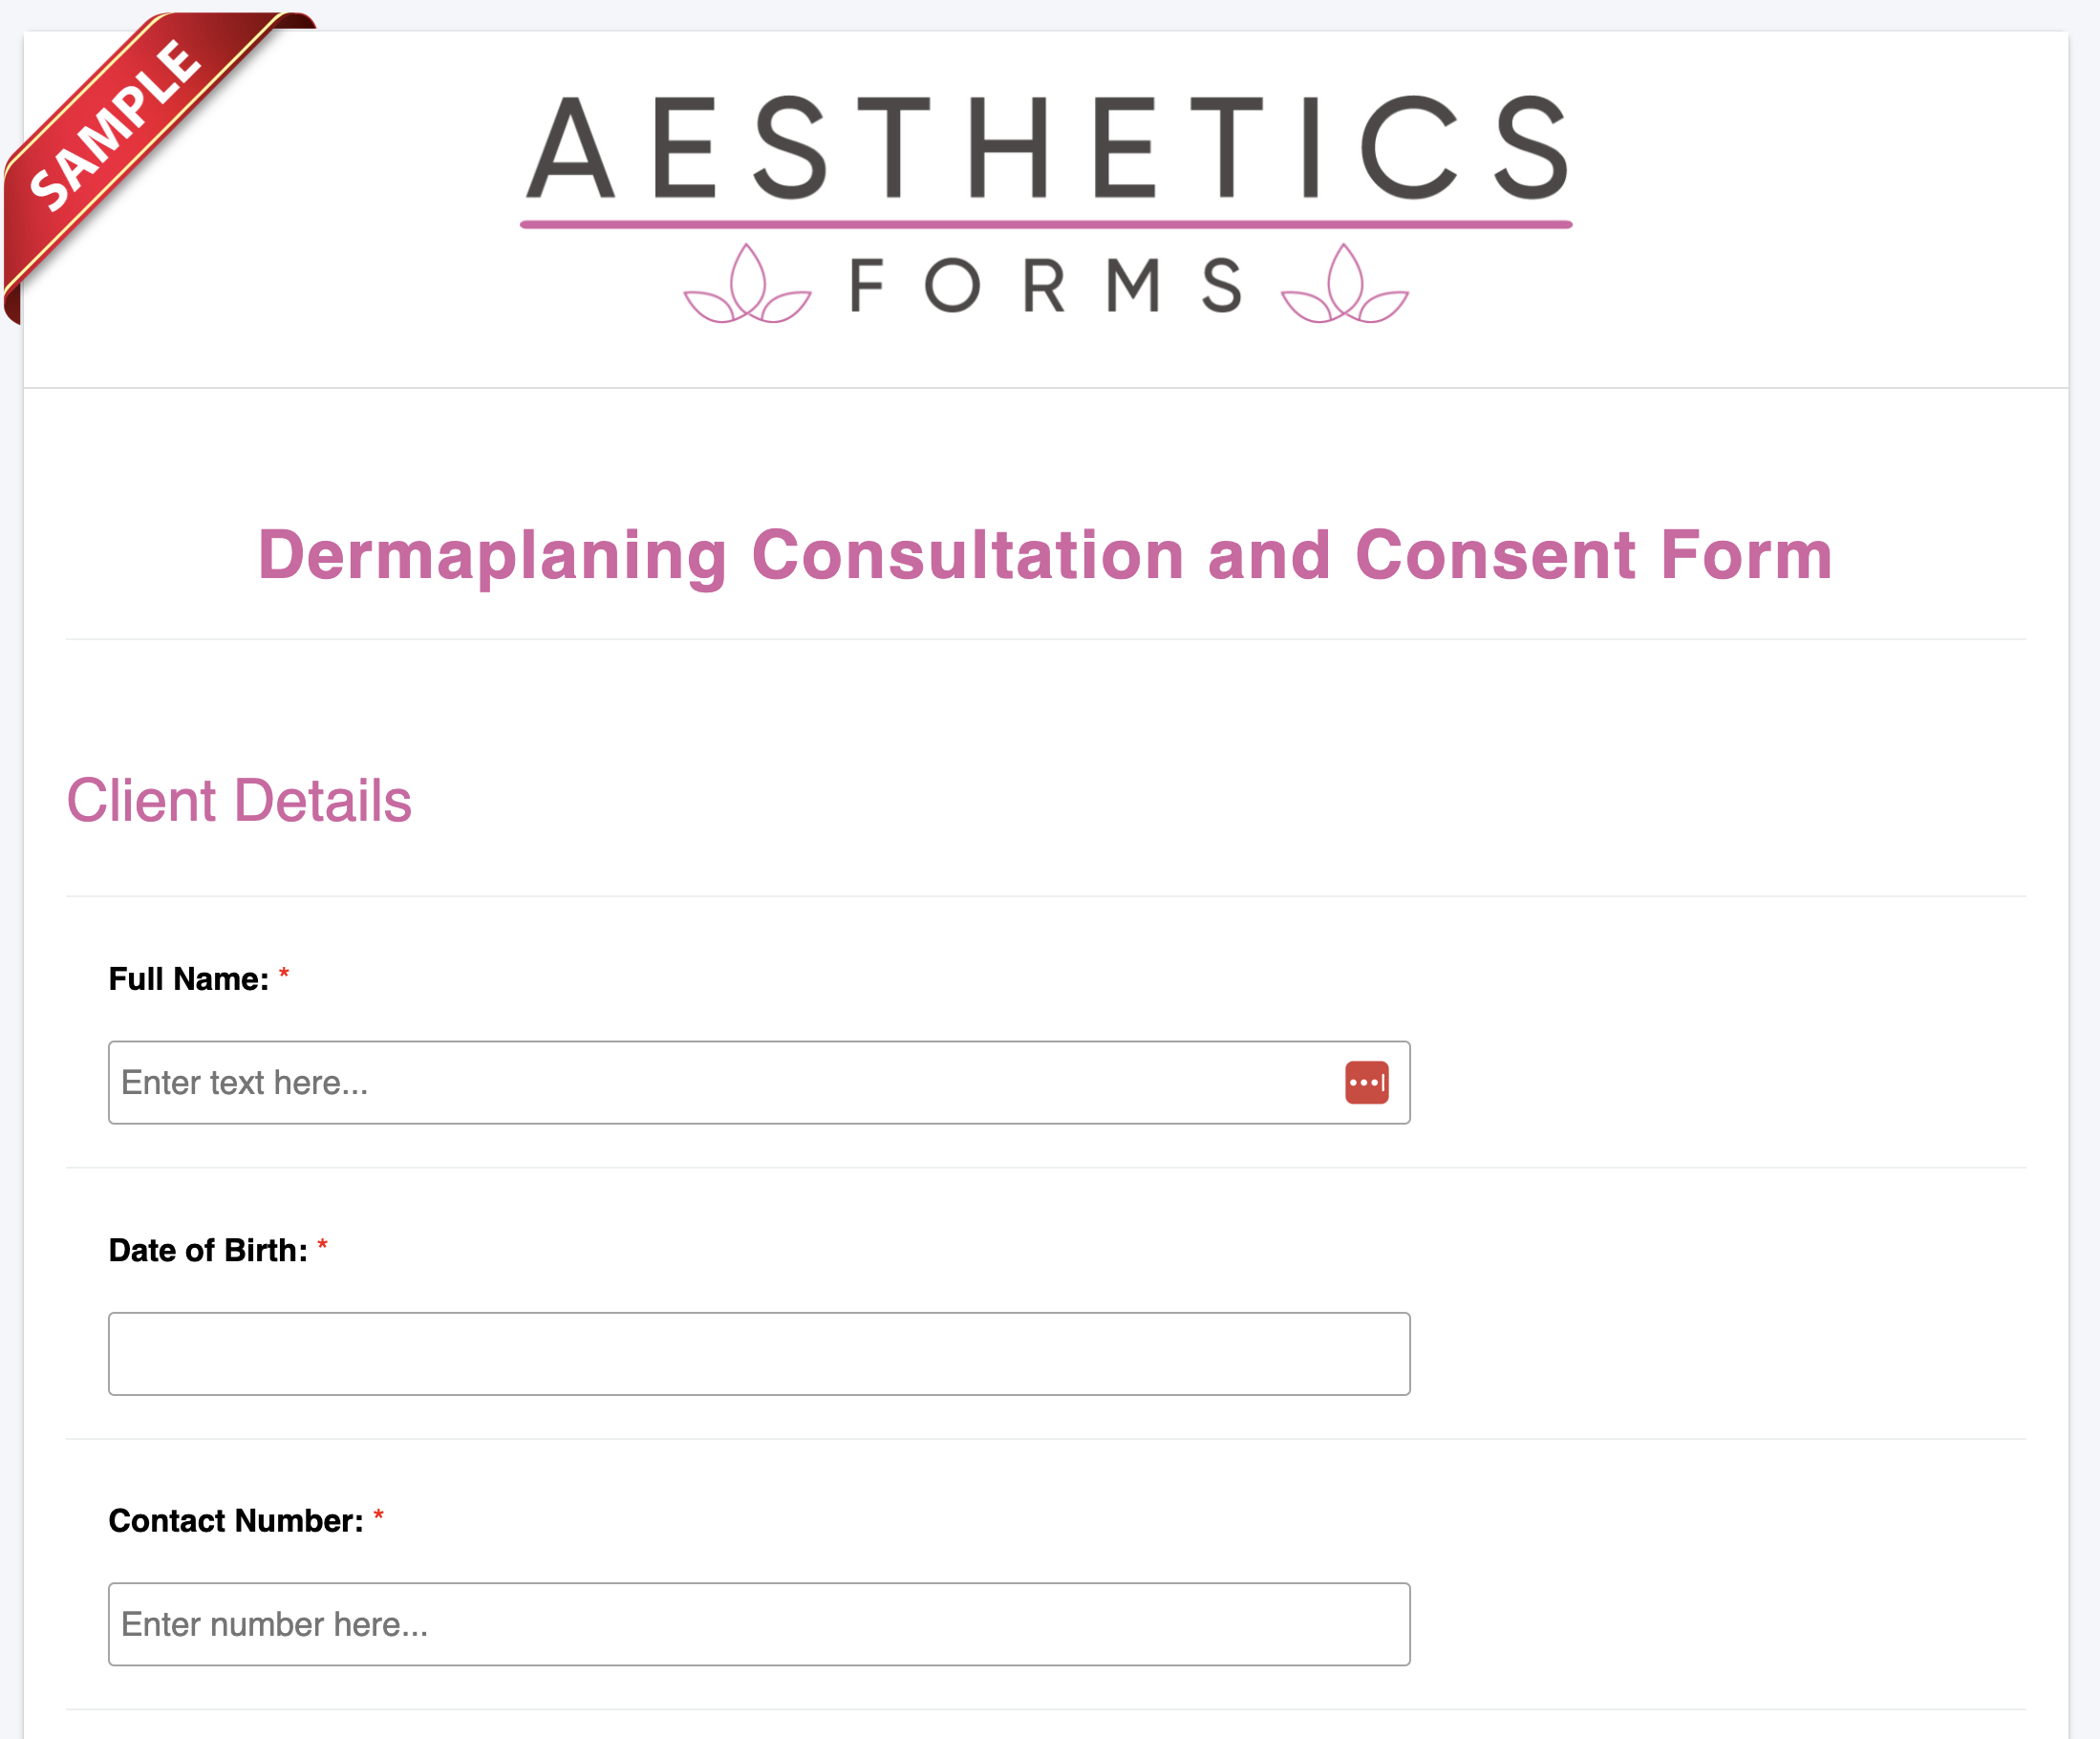 Dermaplaning Consultation Form